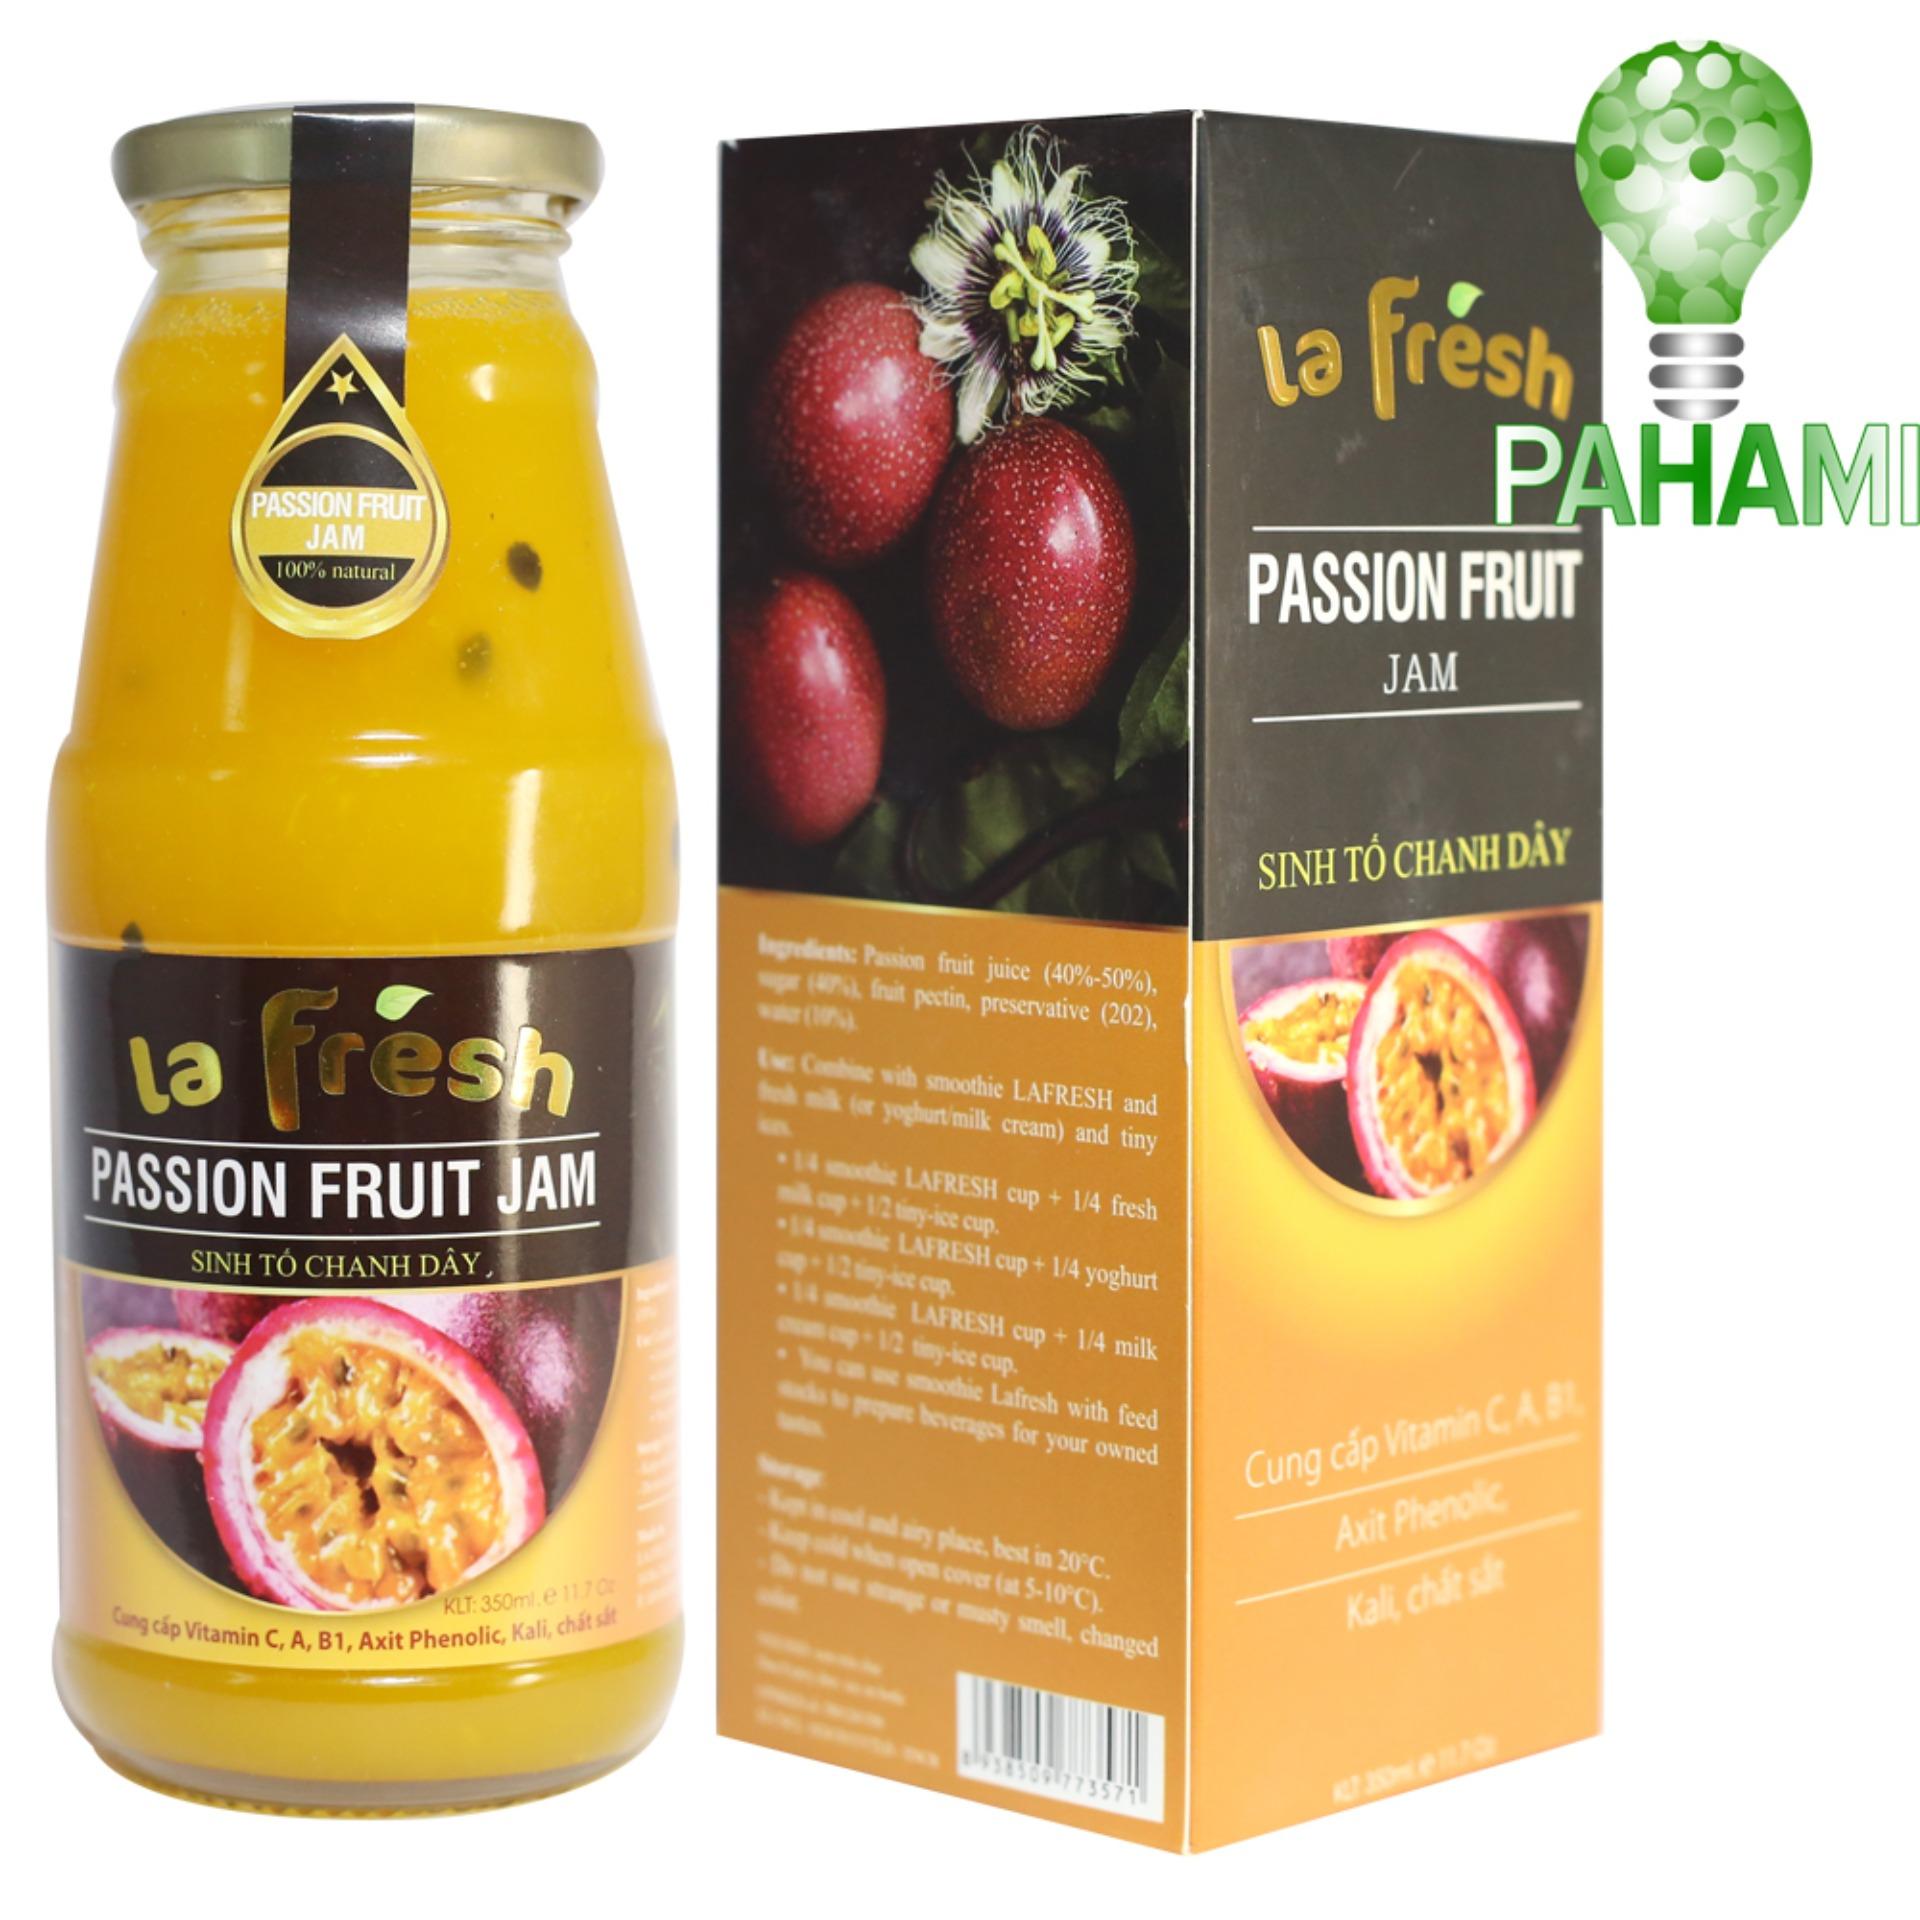 Sinh tố mứt Chanh dây La fresh 350ml - Passion fruit Jam